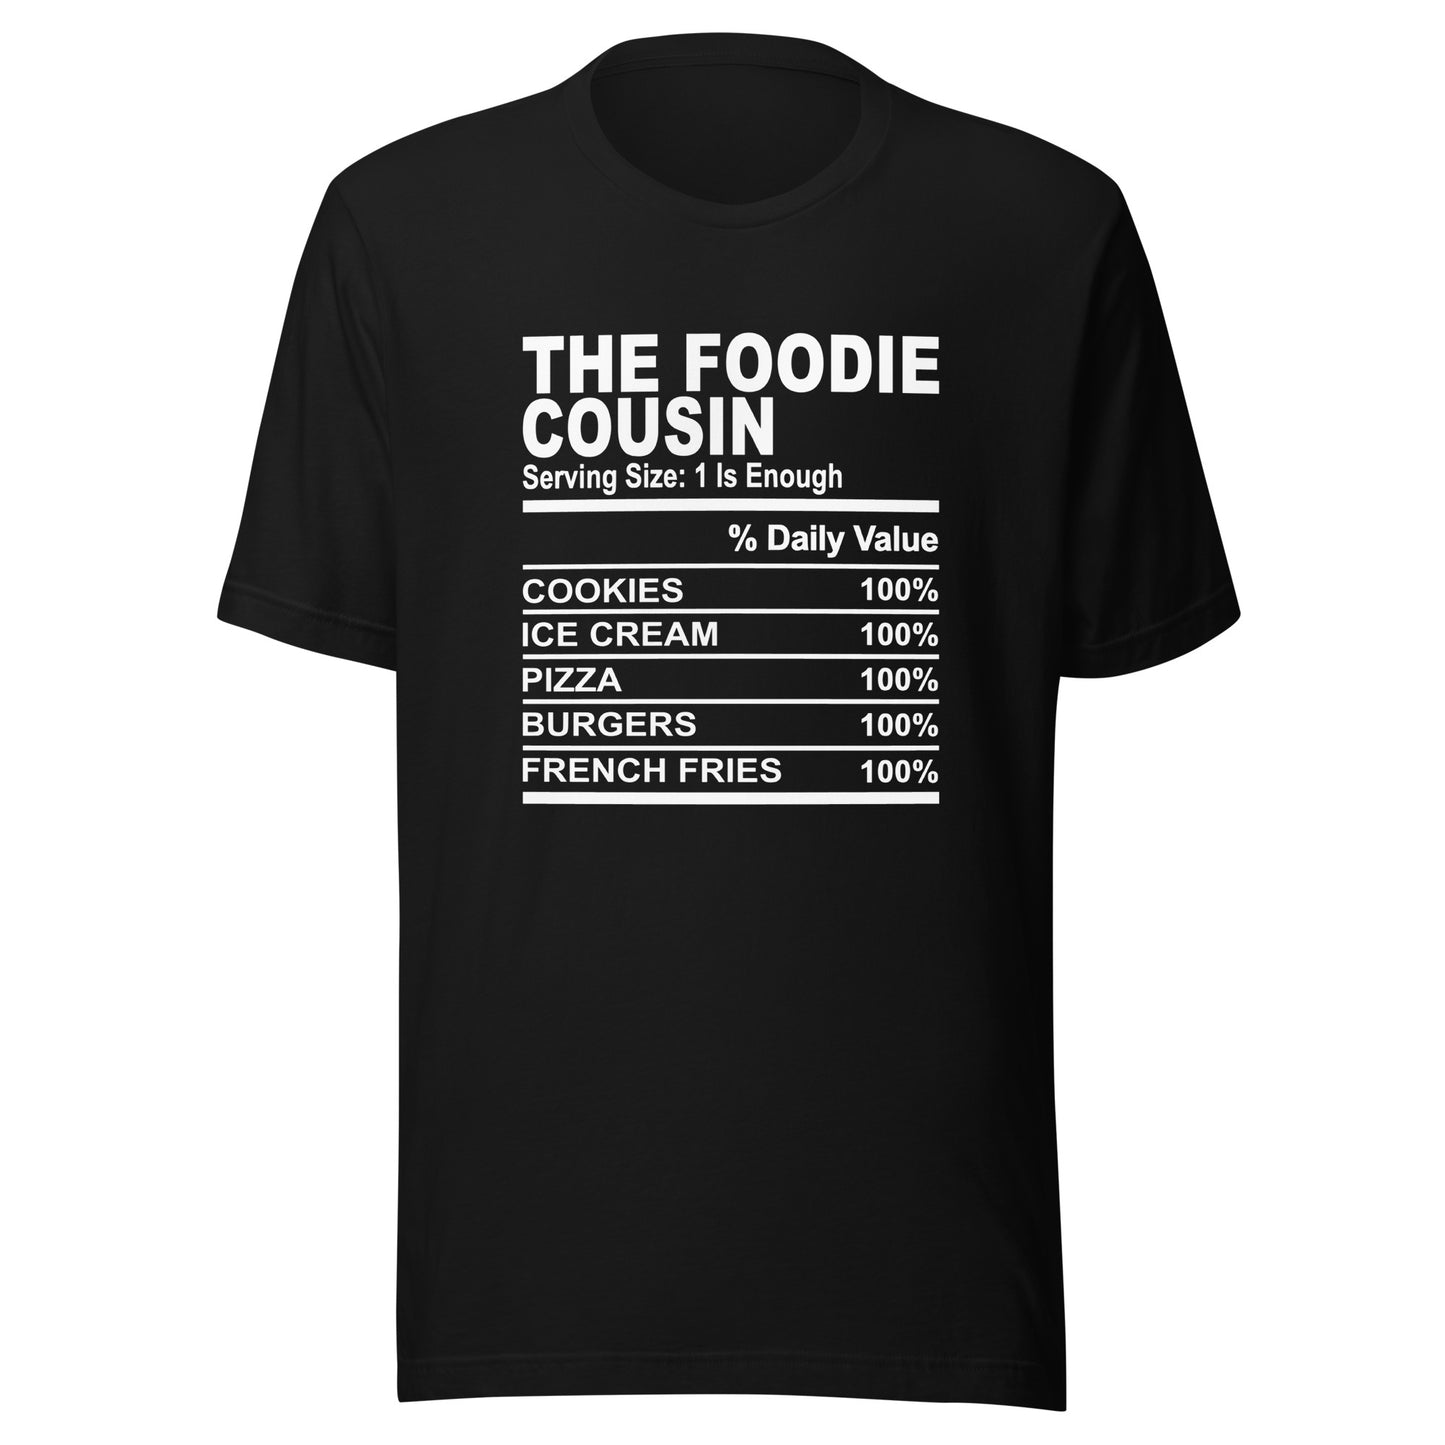 THE FOODIE COUSIN - 2XL-3XL - Unisex T-Shirt (white print)